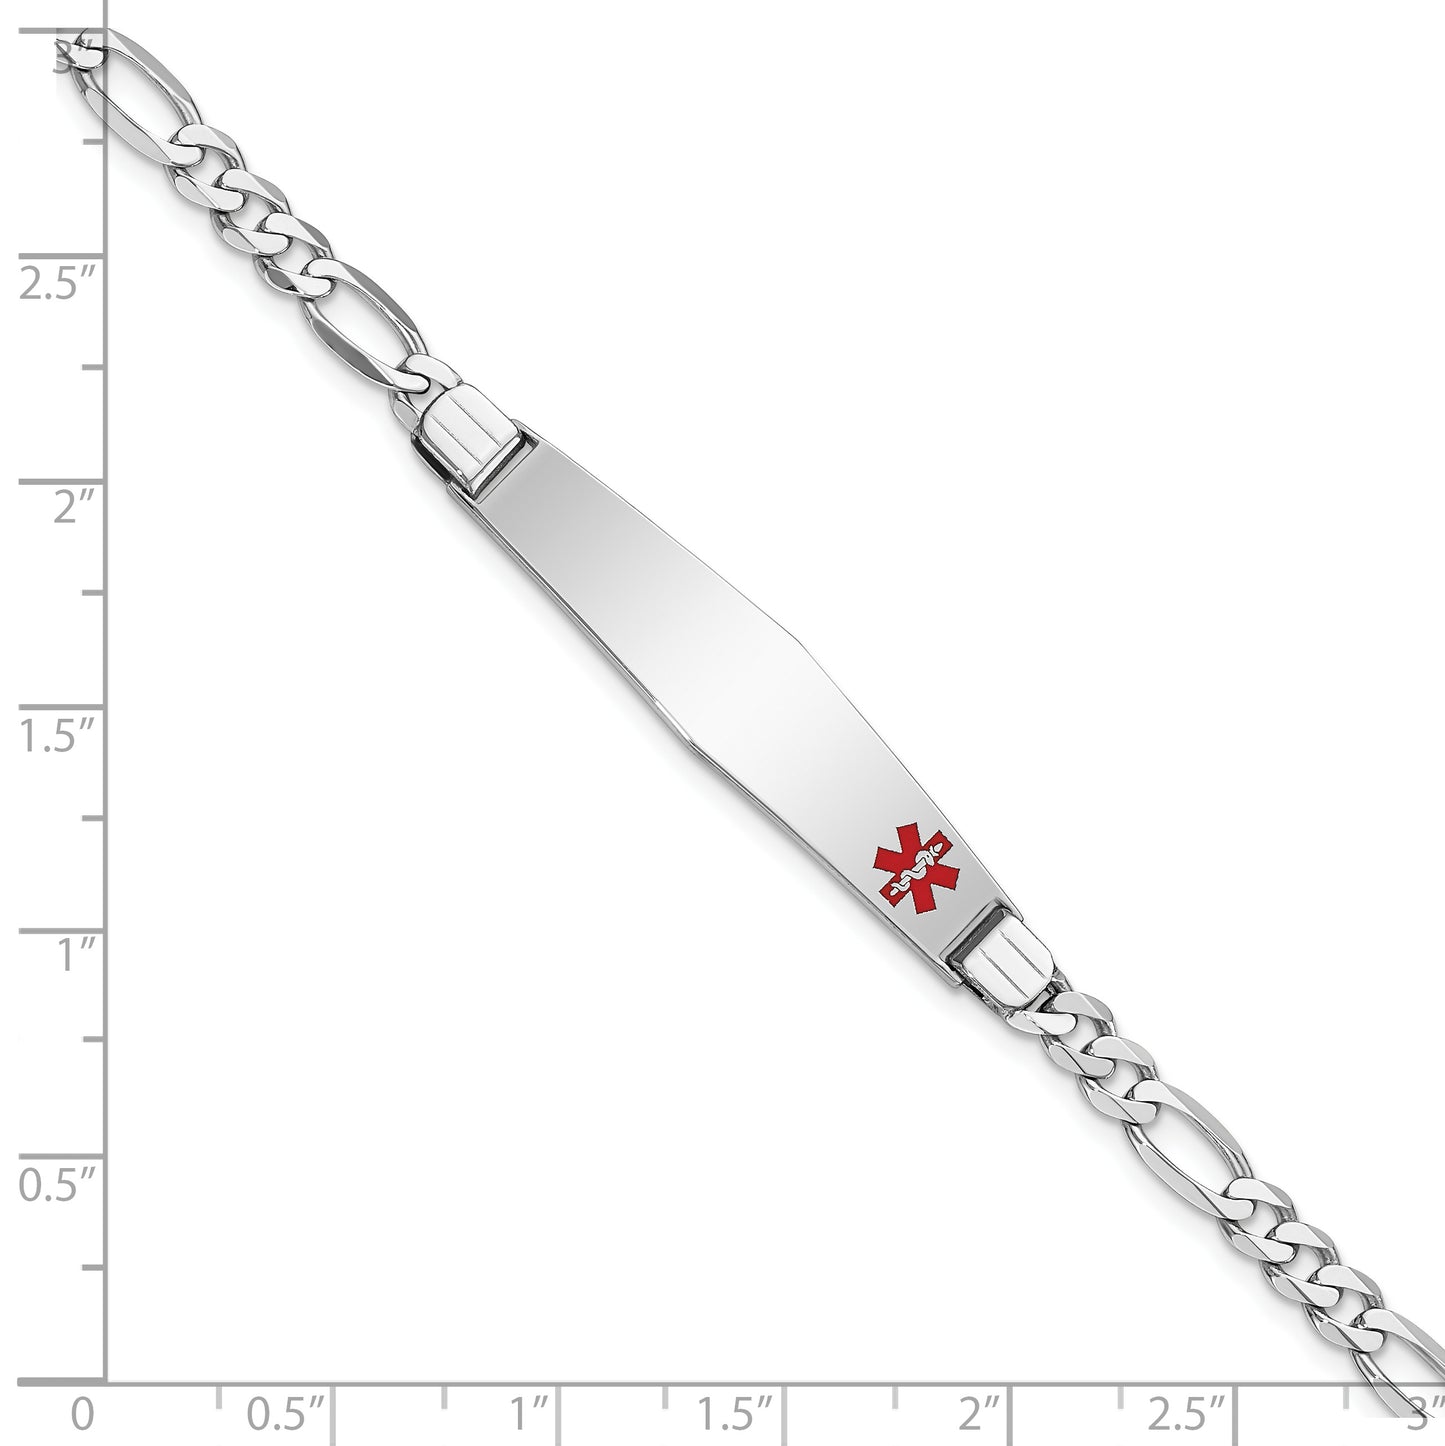 14 Karat White Gold Medical 9.0mm Soft Diamond Shape Red Enamel 7 inch Figaro Link ID Bracelet